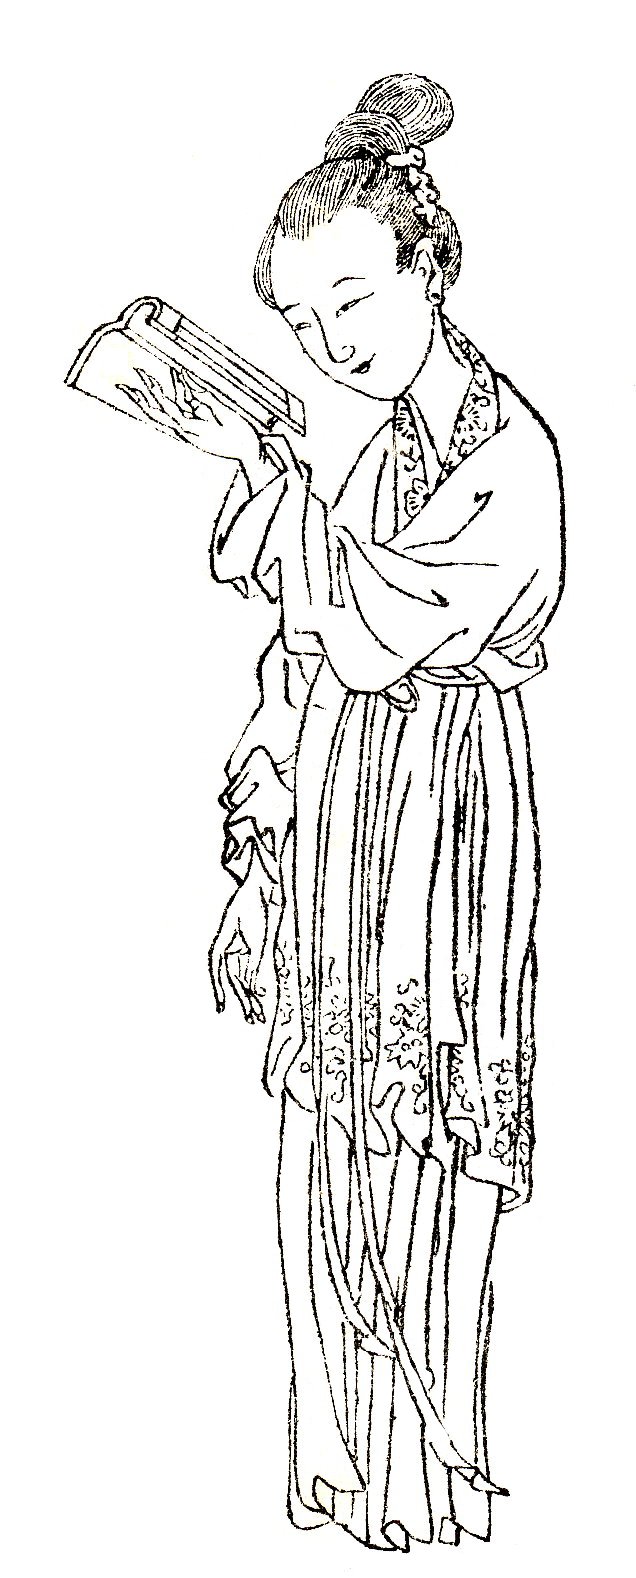 Rysunek Ban Zhao autorstwa Shangguan Zhou (上官周, b. 1665)